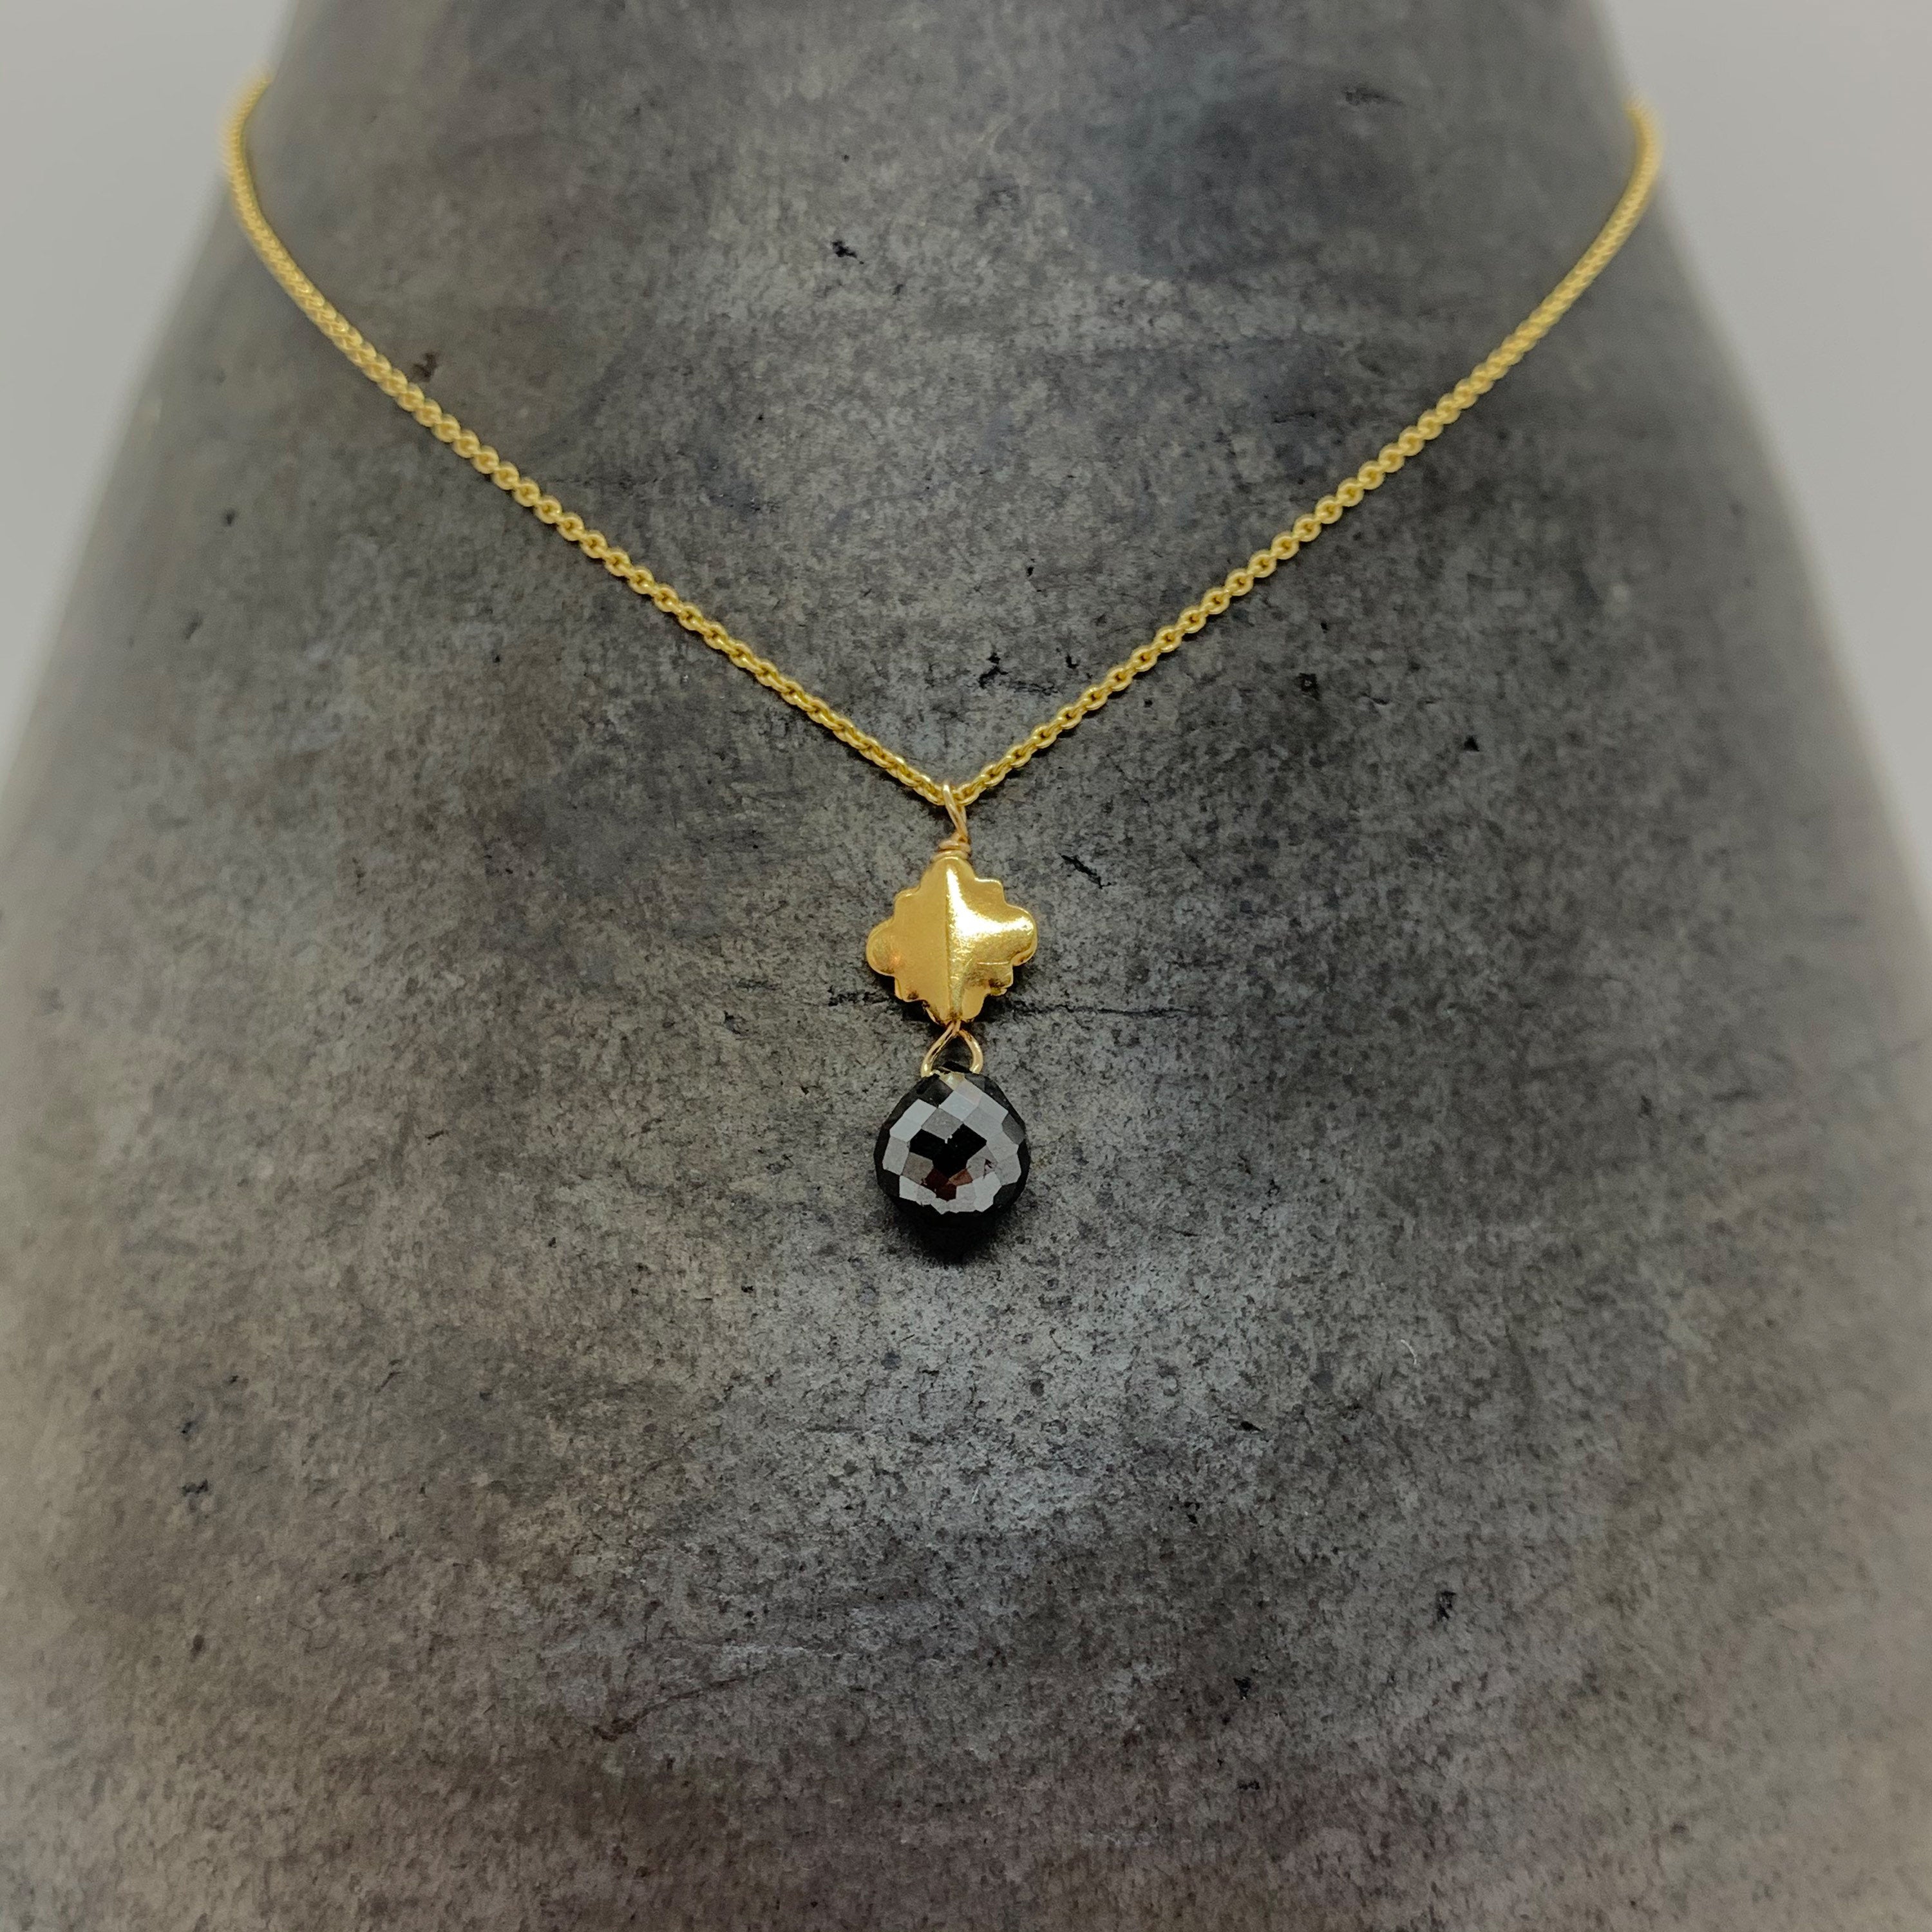 14k Gold Chain Necklace w/ Black Diamond & 18k Gold Pendant